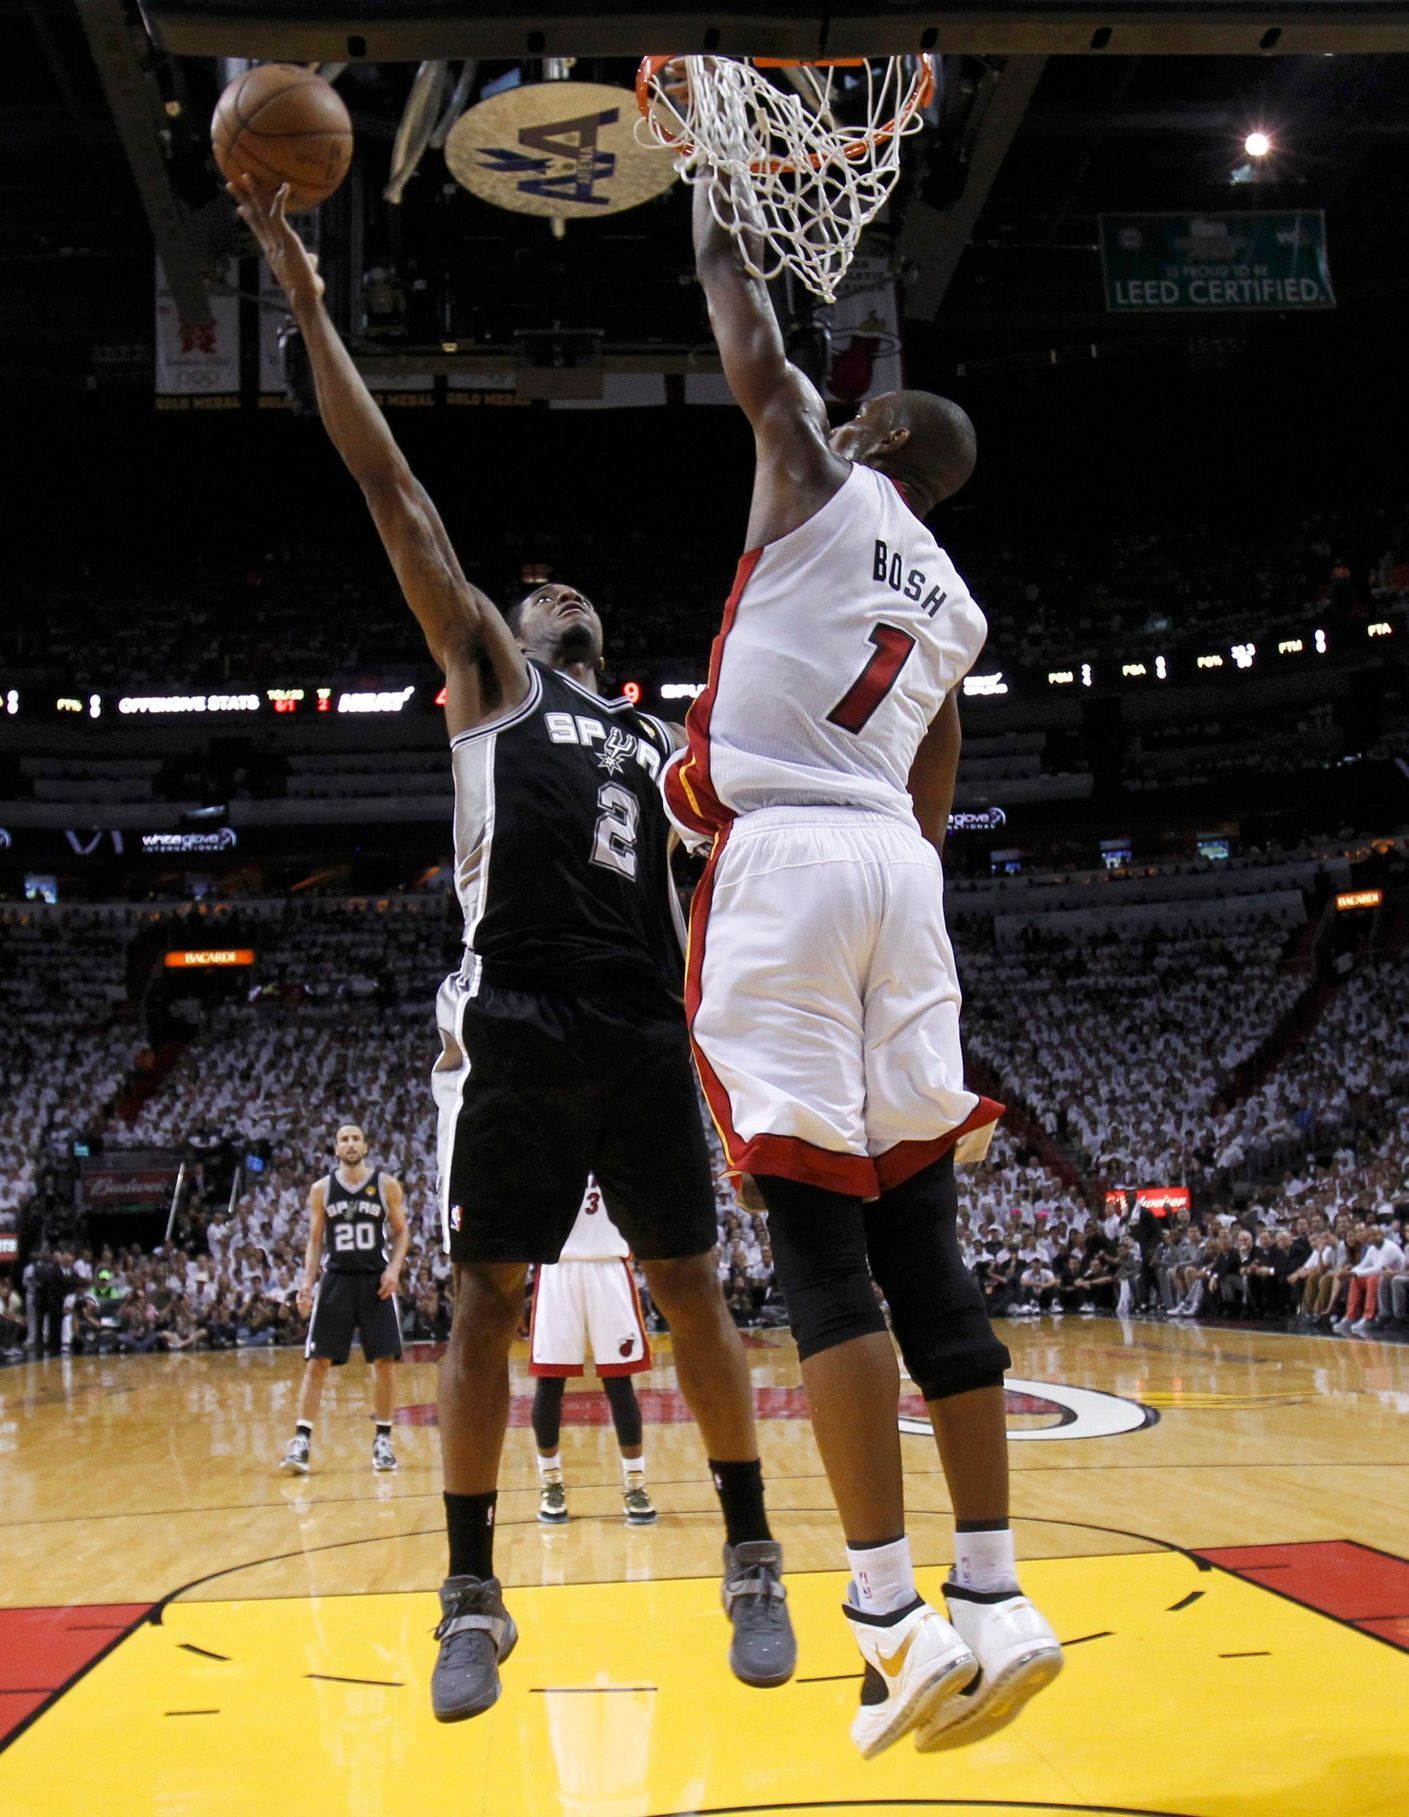 Spurs' Leonard scores on Miami Heat's Bosh in the first half